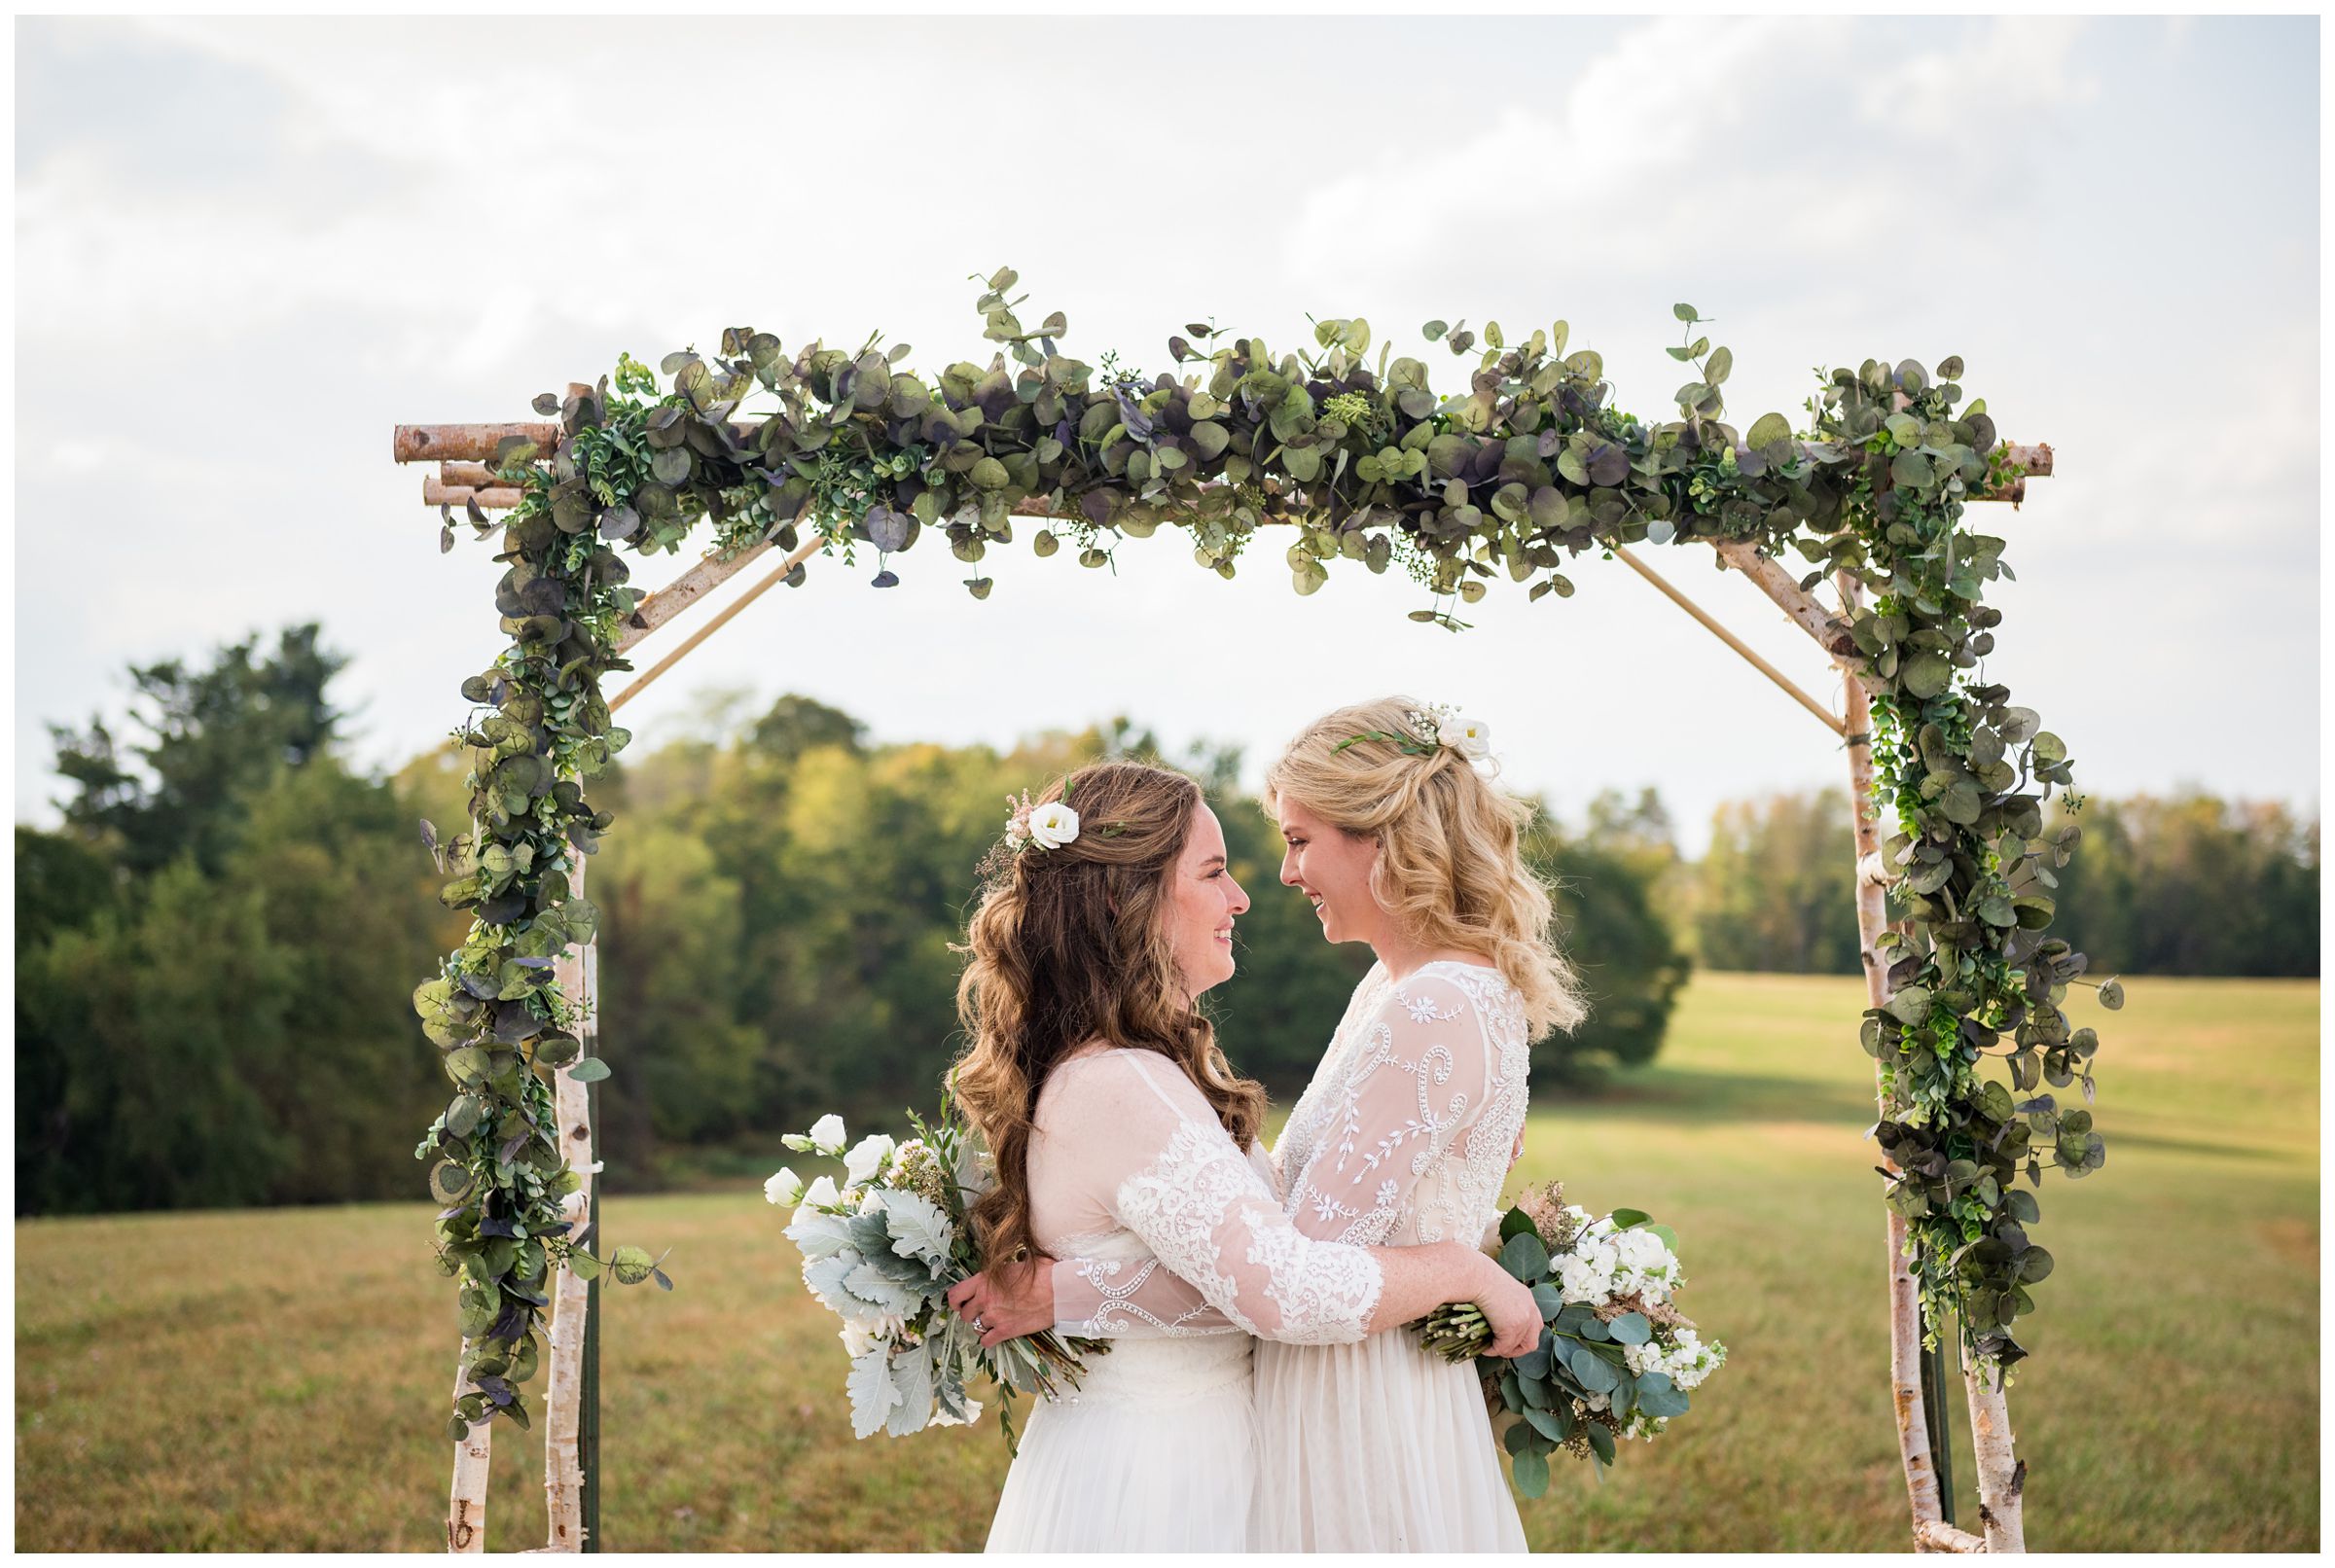 Lesbian couple bridal portraits under greenery arch